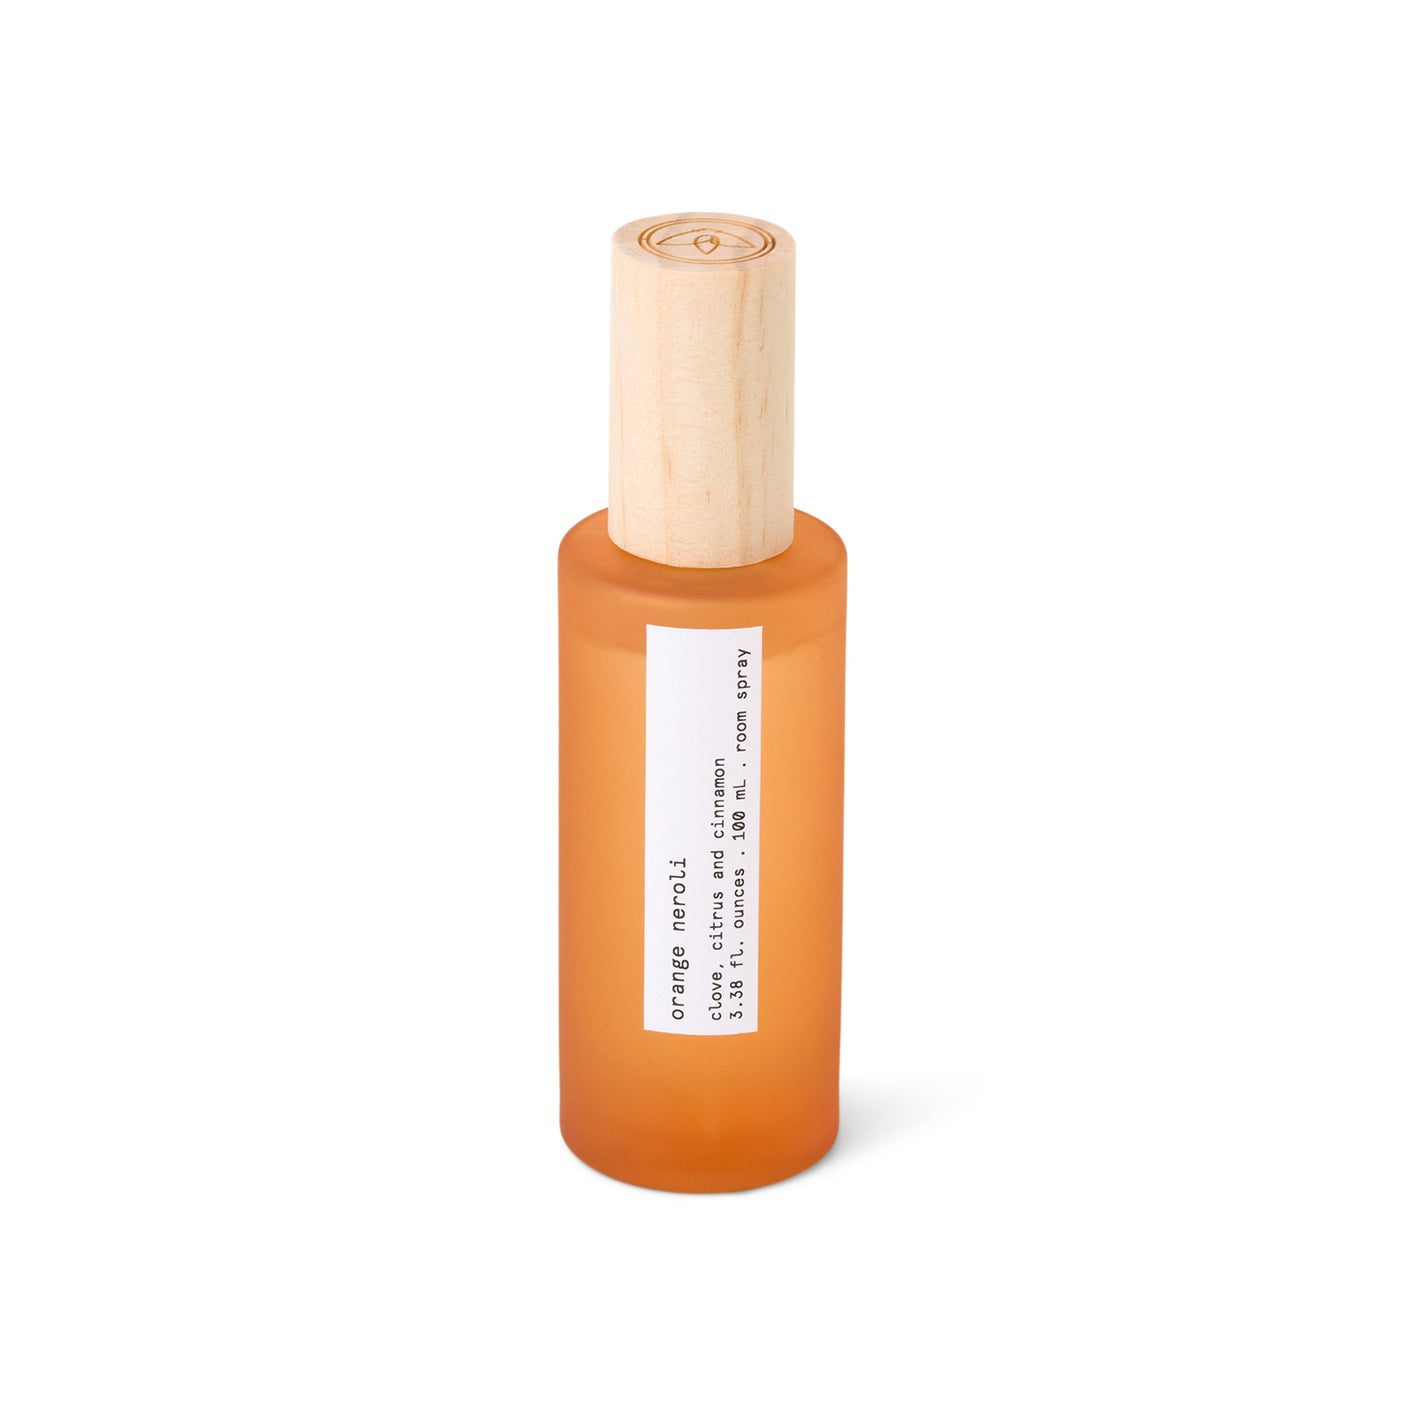 Firefly Senses 3.3 fl oz Orange Glass Room Spray with Wood Lid. Orange Neroli.